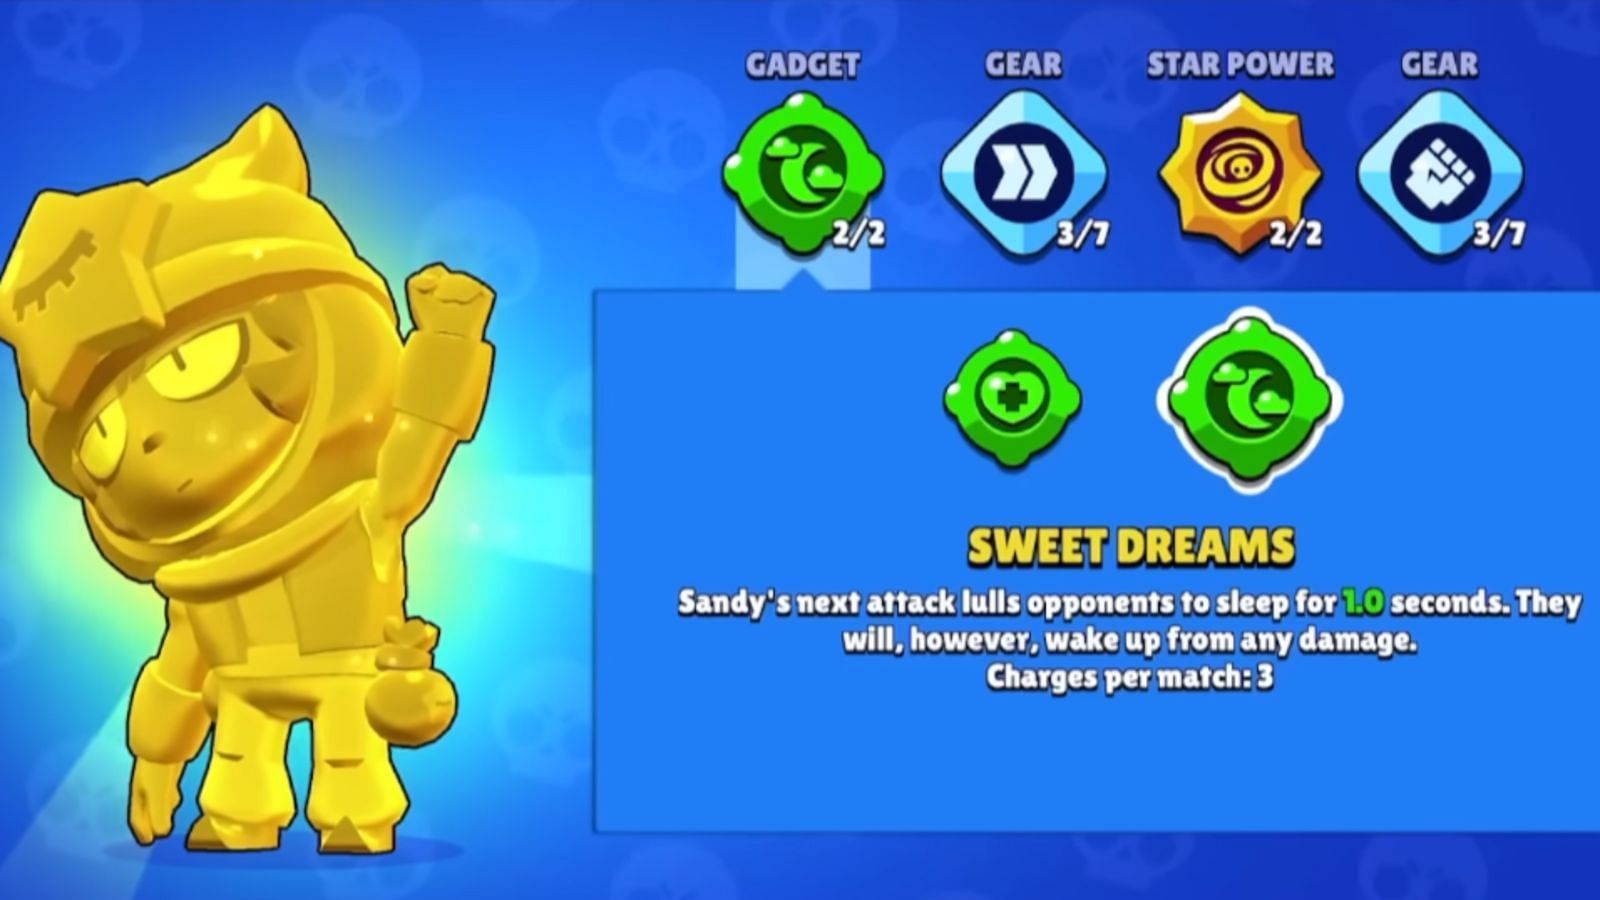 Sweet Dreams Gadget (Image via Supercell)